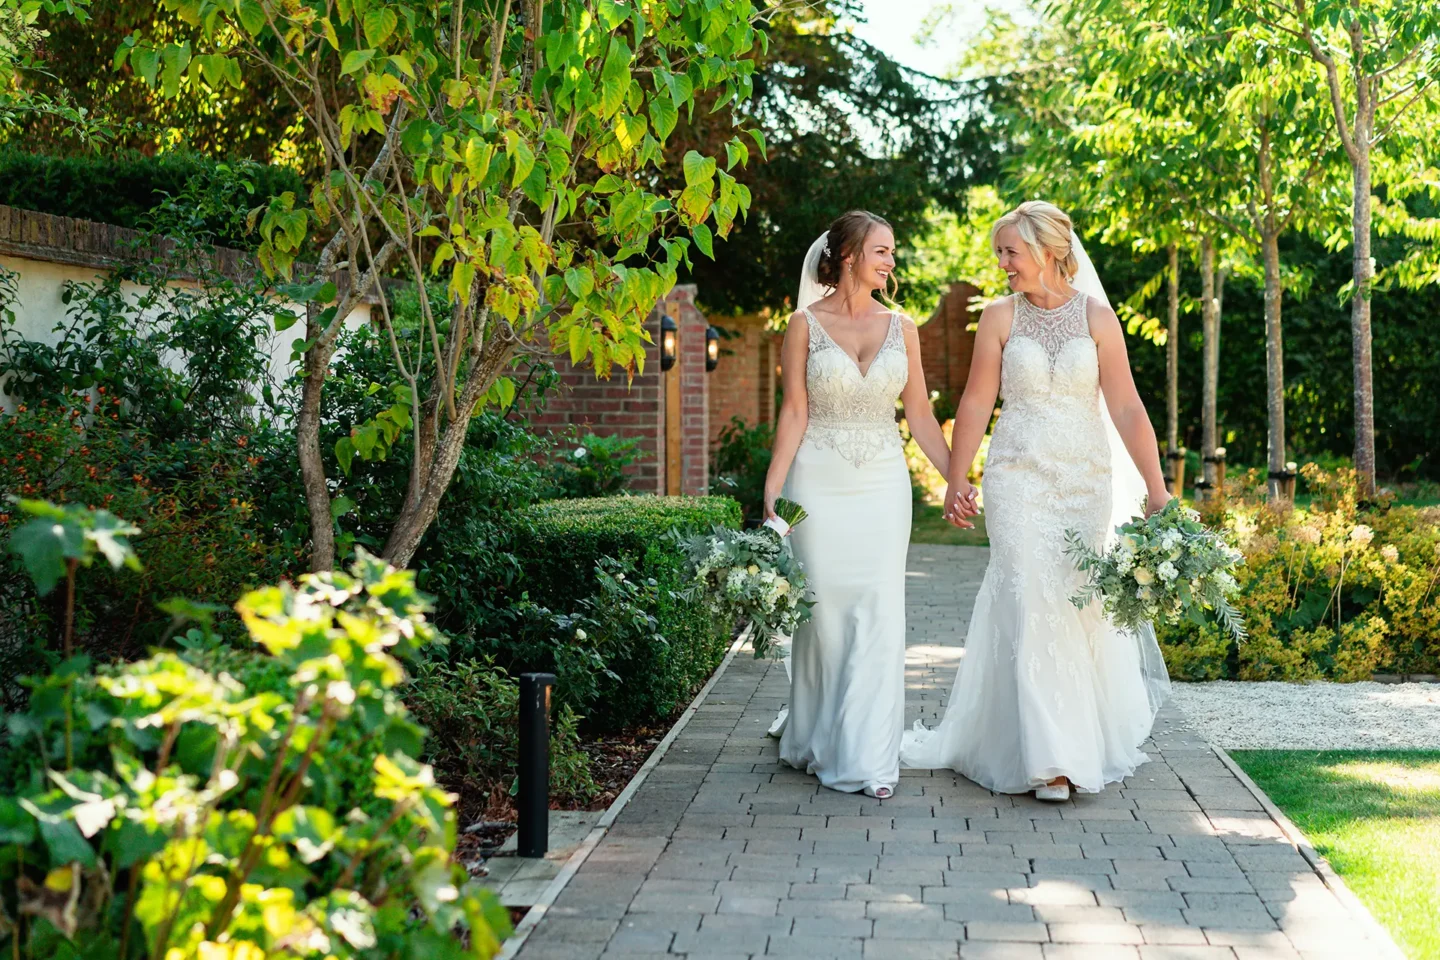 Syrencot brides walking in gardens